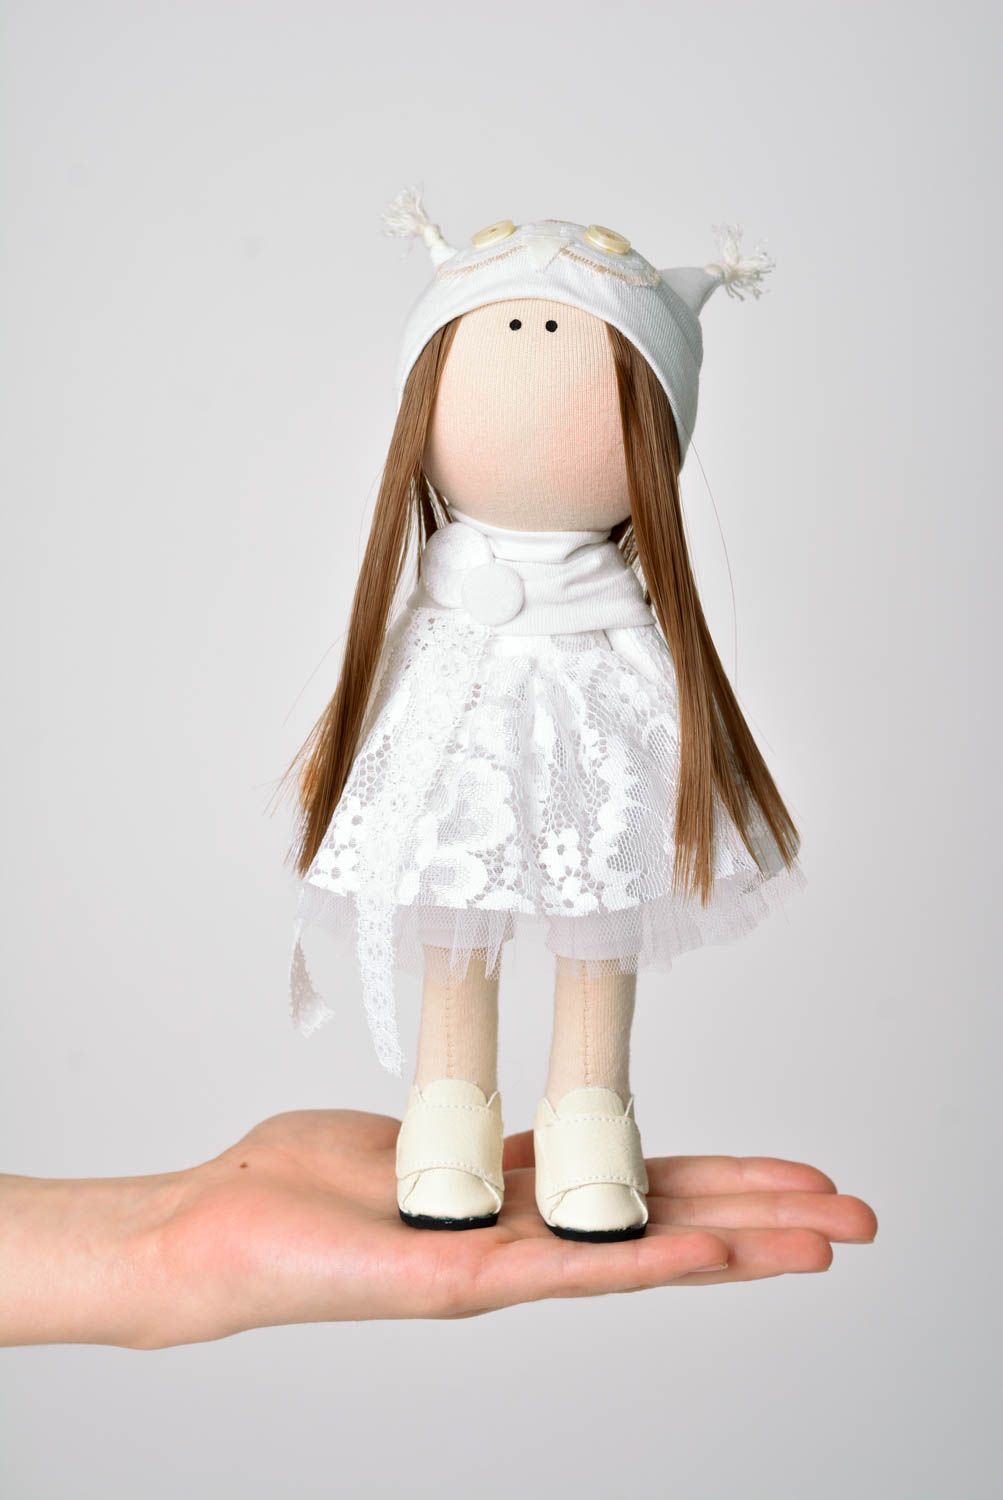 Handmade doll fabric doll designer rag doll interior decor gift ideas photo 2